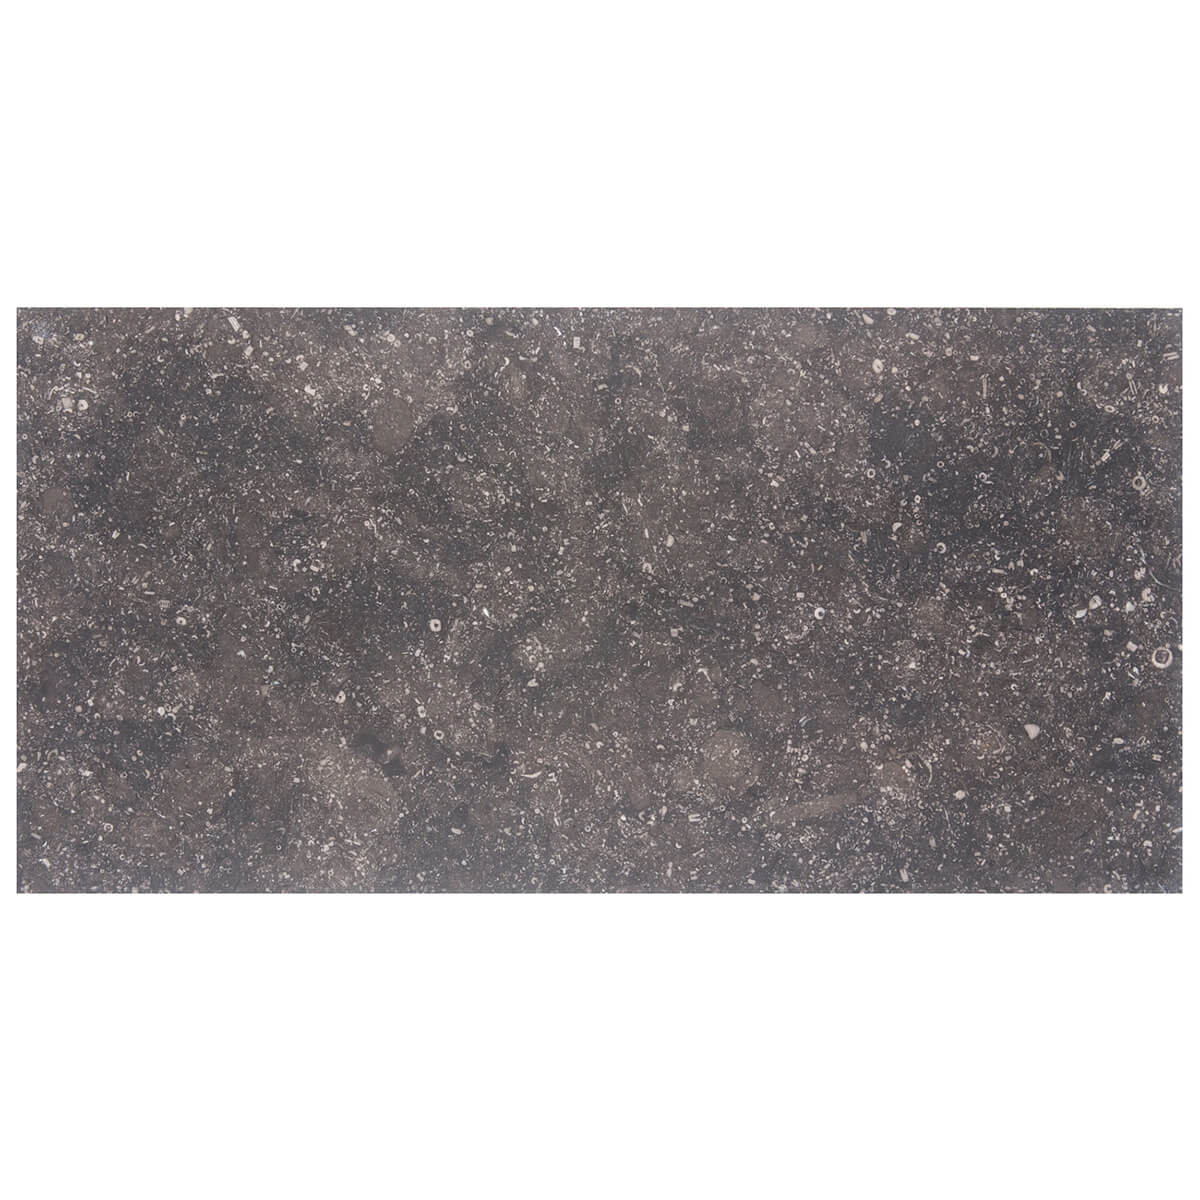 haussmann noir sully limestone rectangle natural stone field tile 12x24 honed